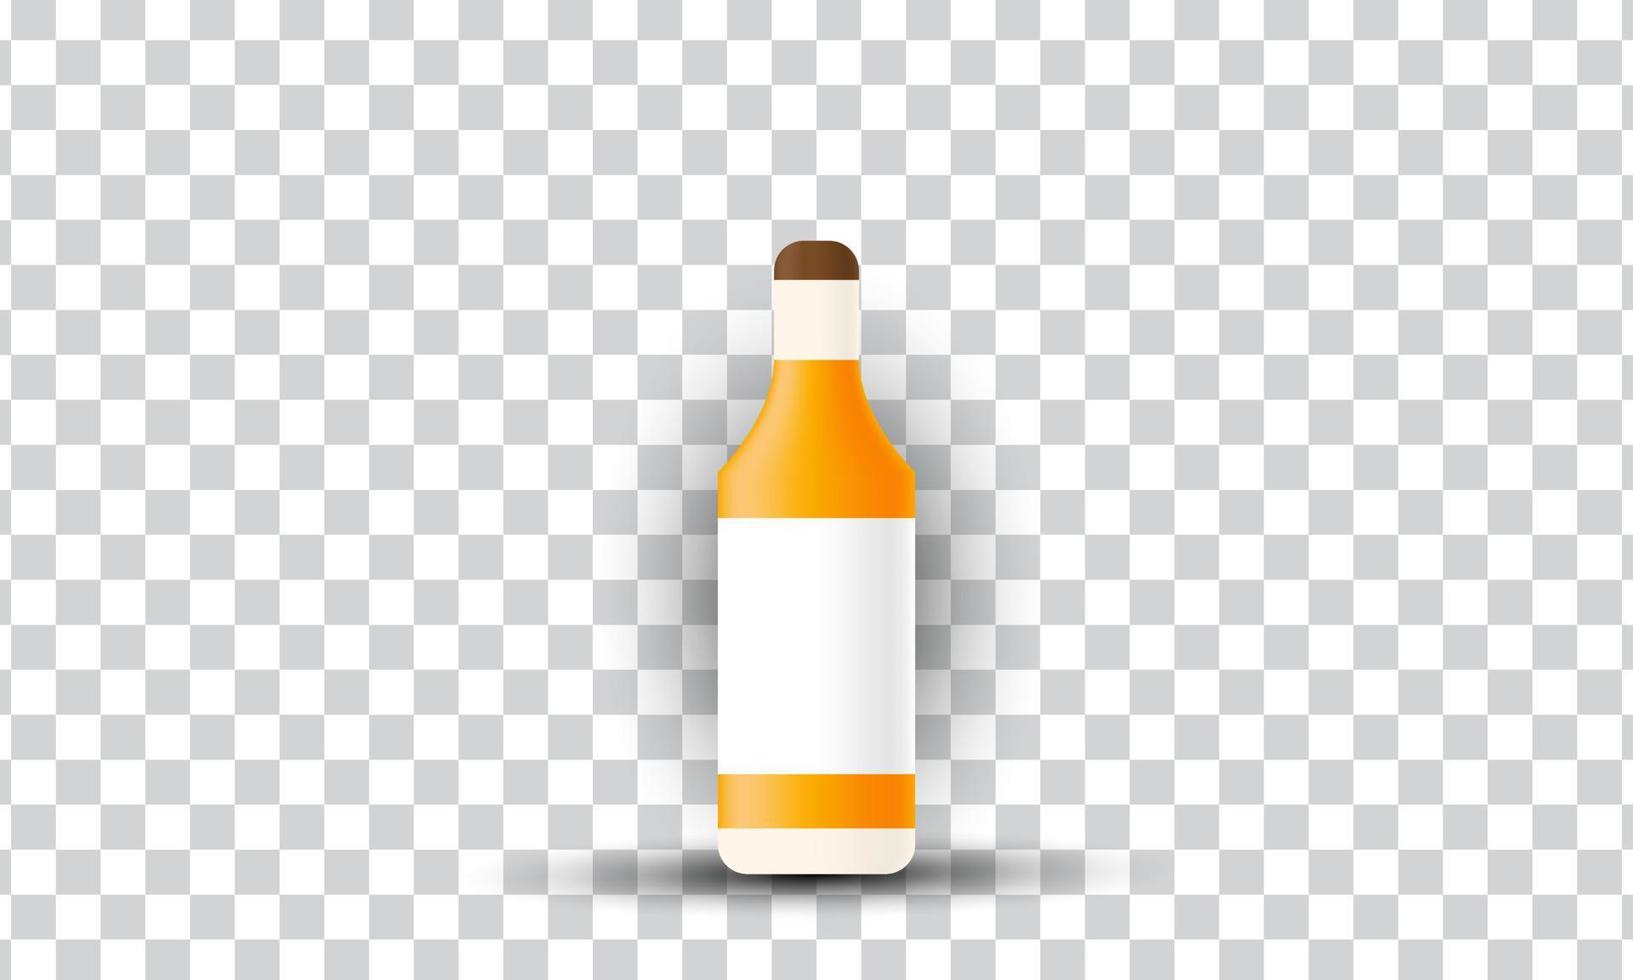 unique creative 3d bottle orange juice design icon isolated on vector